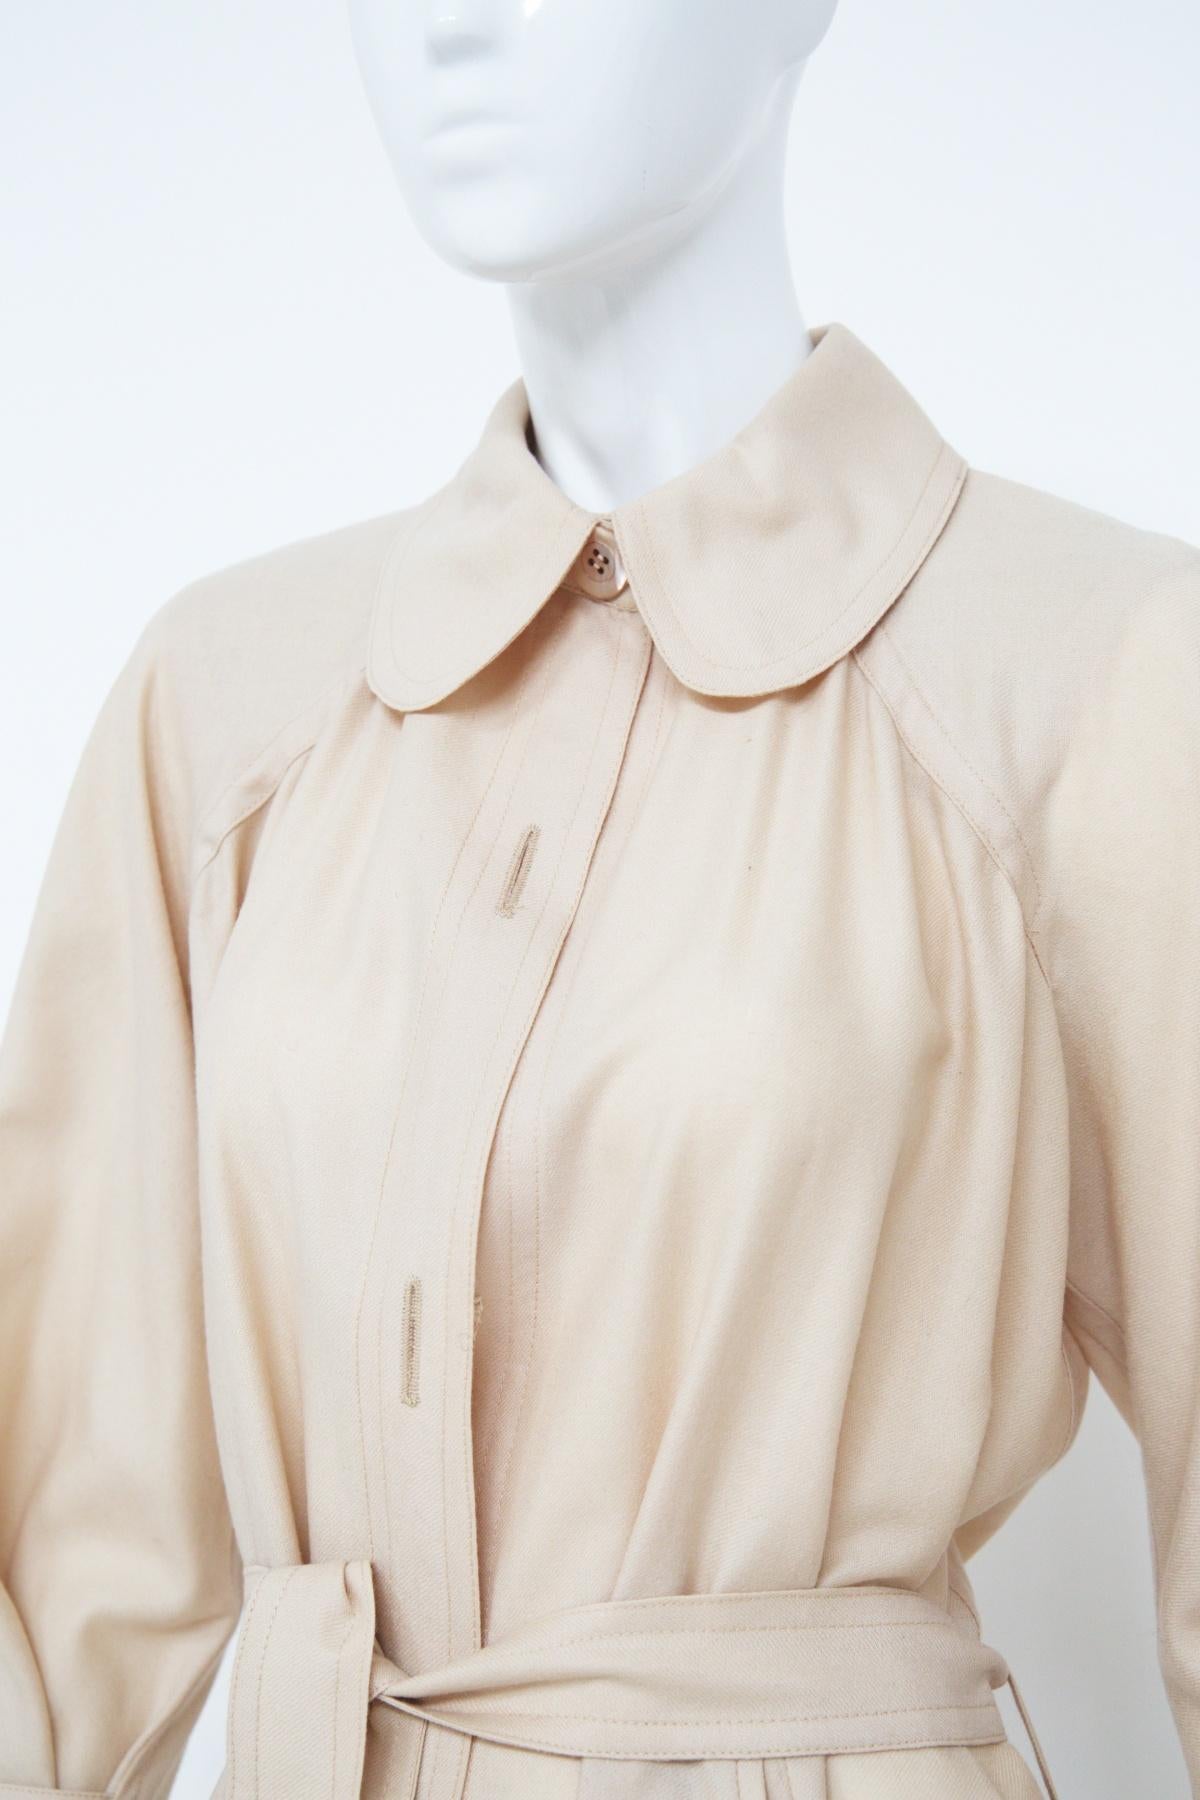 Krizia Vintage Long Dress in Beige Cotton with Belt For Sale 6